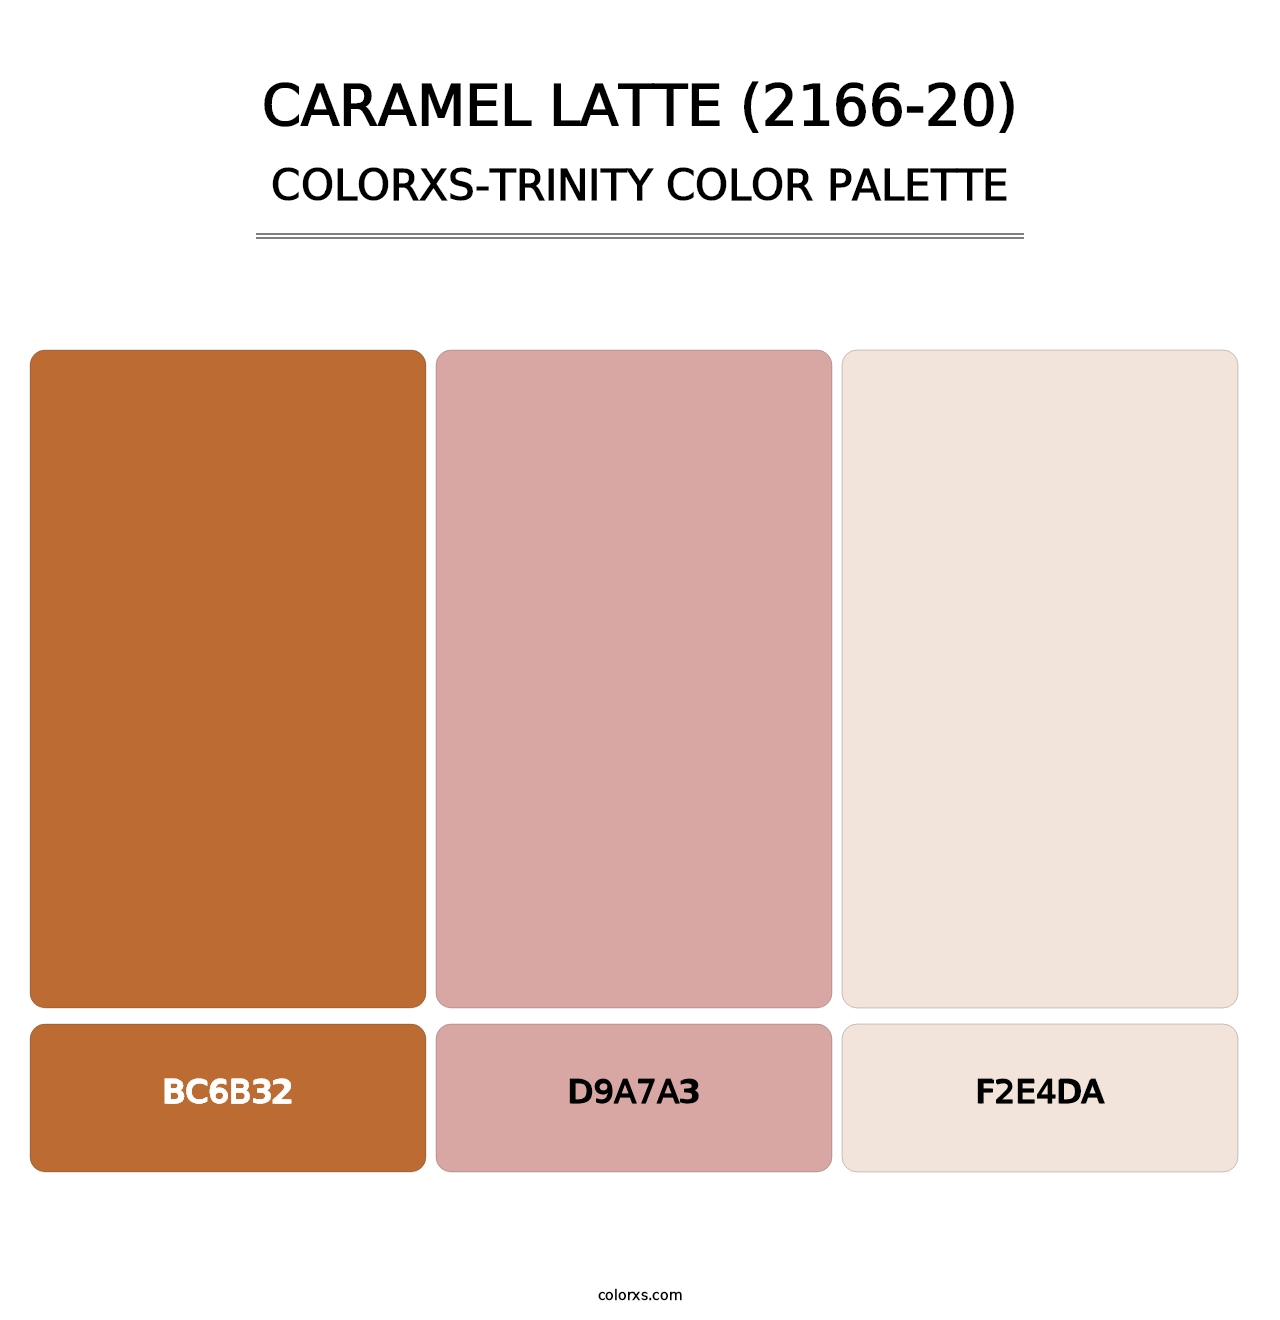 Caramel Latte (2166-20) - Colorxs Trinity Palette